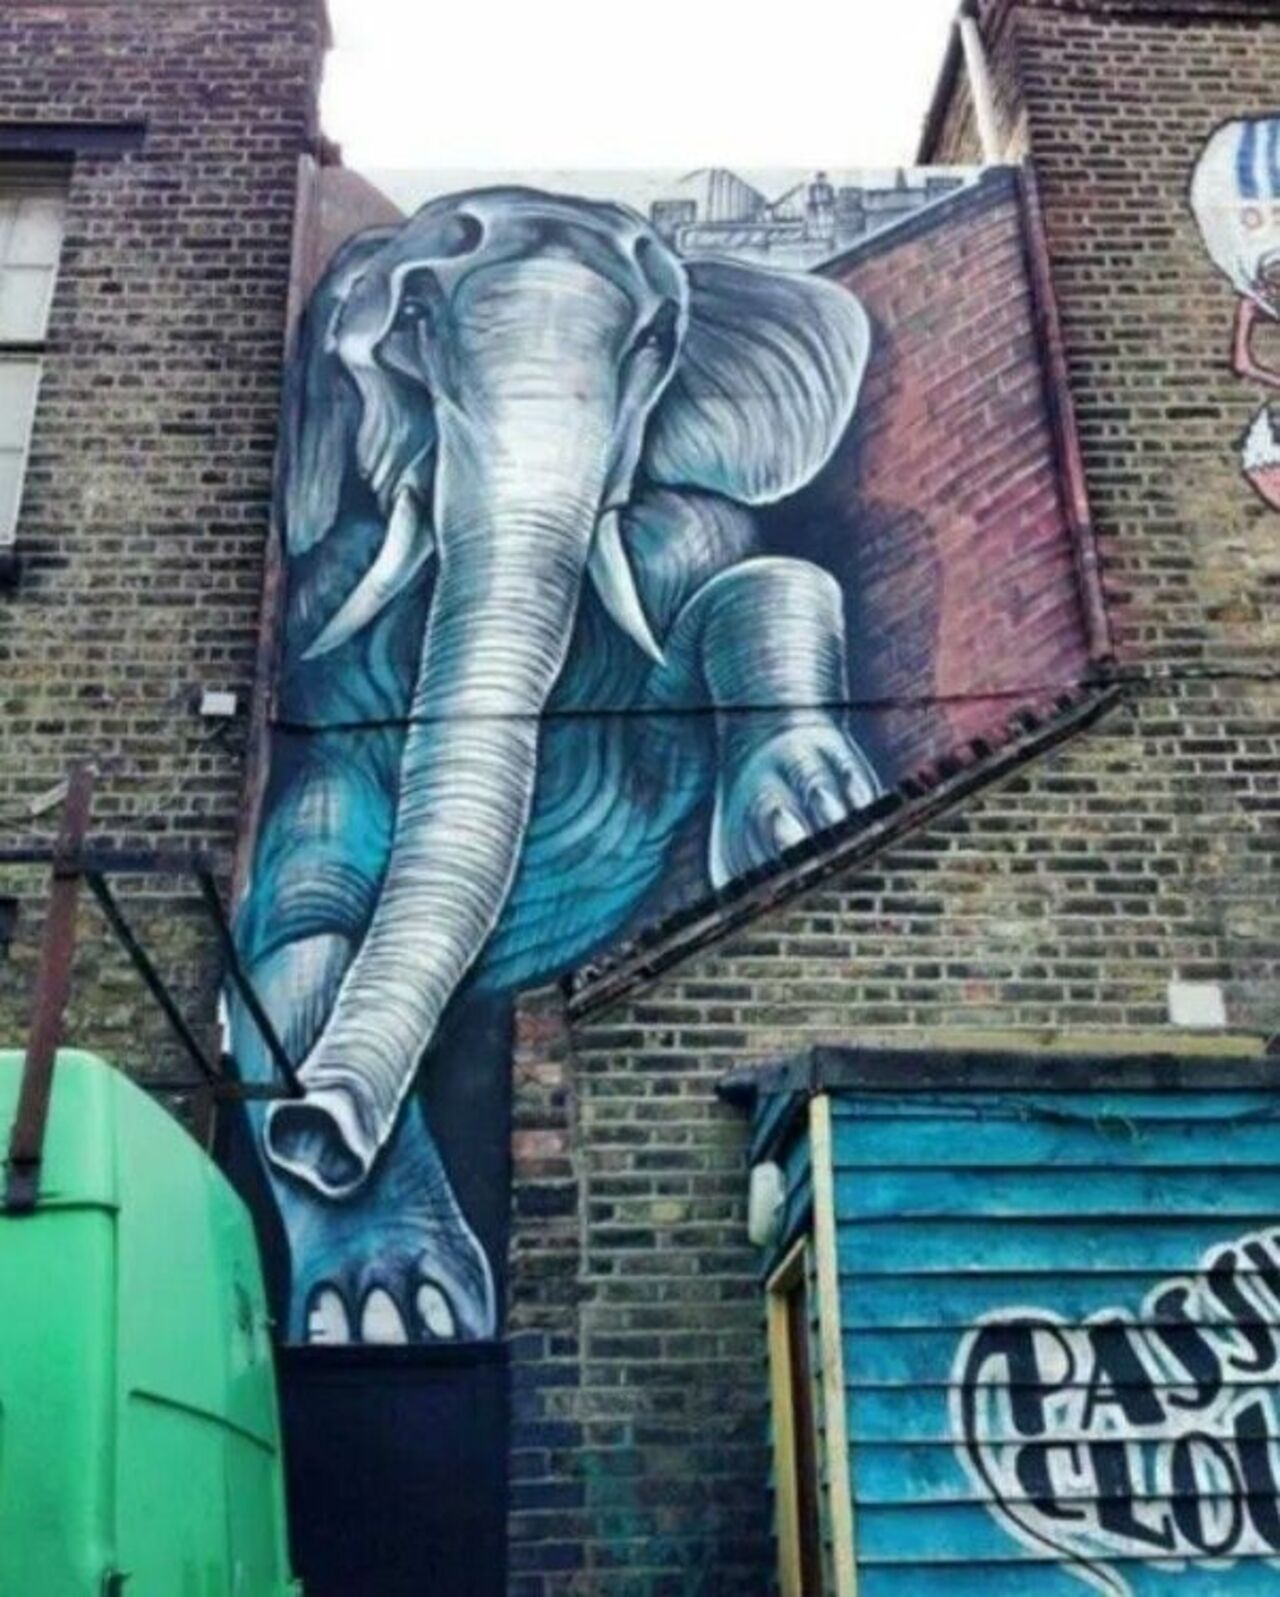 Mural by Shaun Burner, located in London, UK#streetart #mural #graffiti #art https://t.co/ydxOhWTGb4